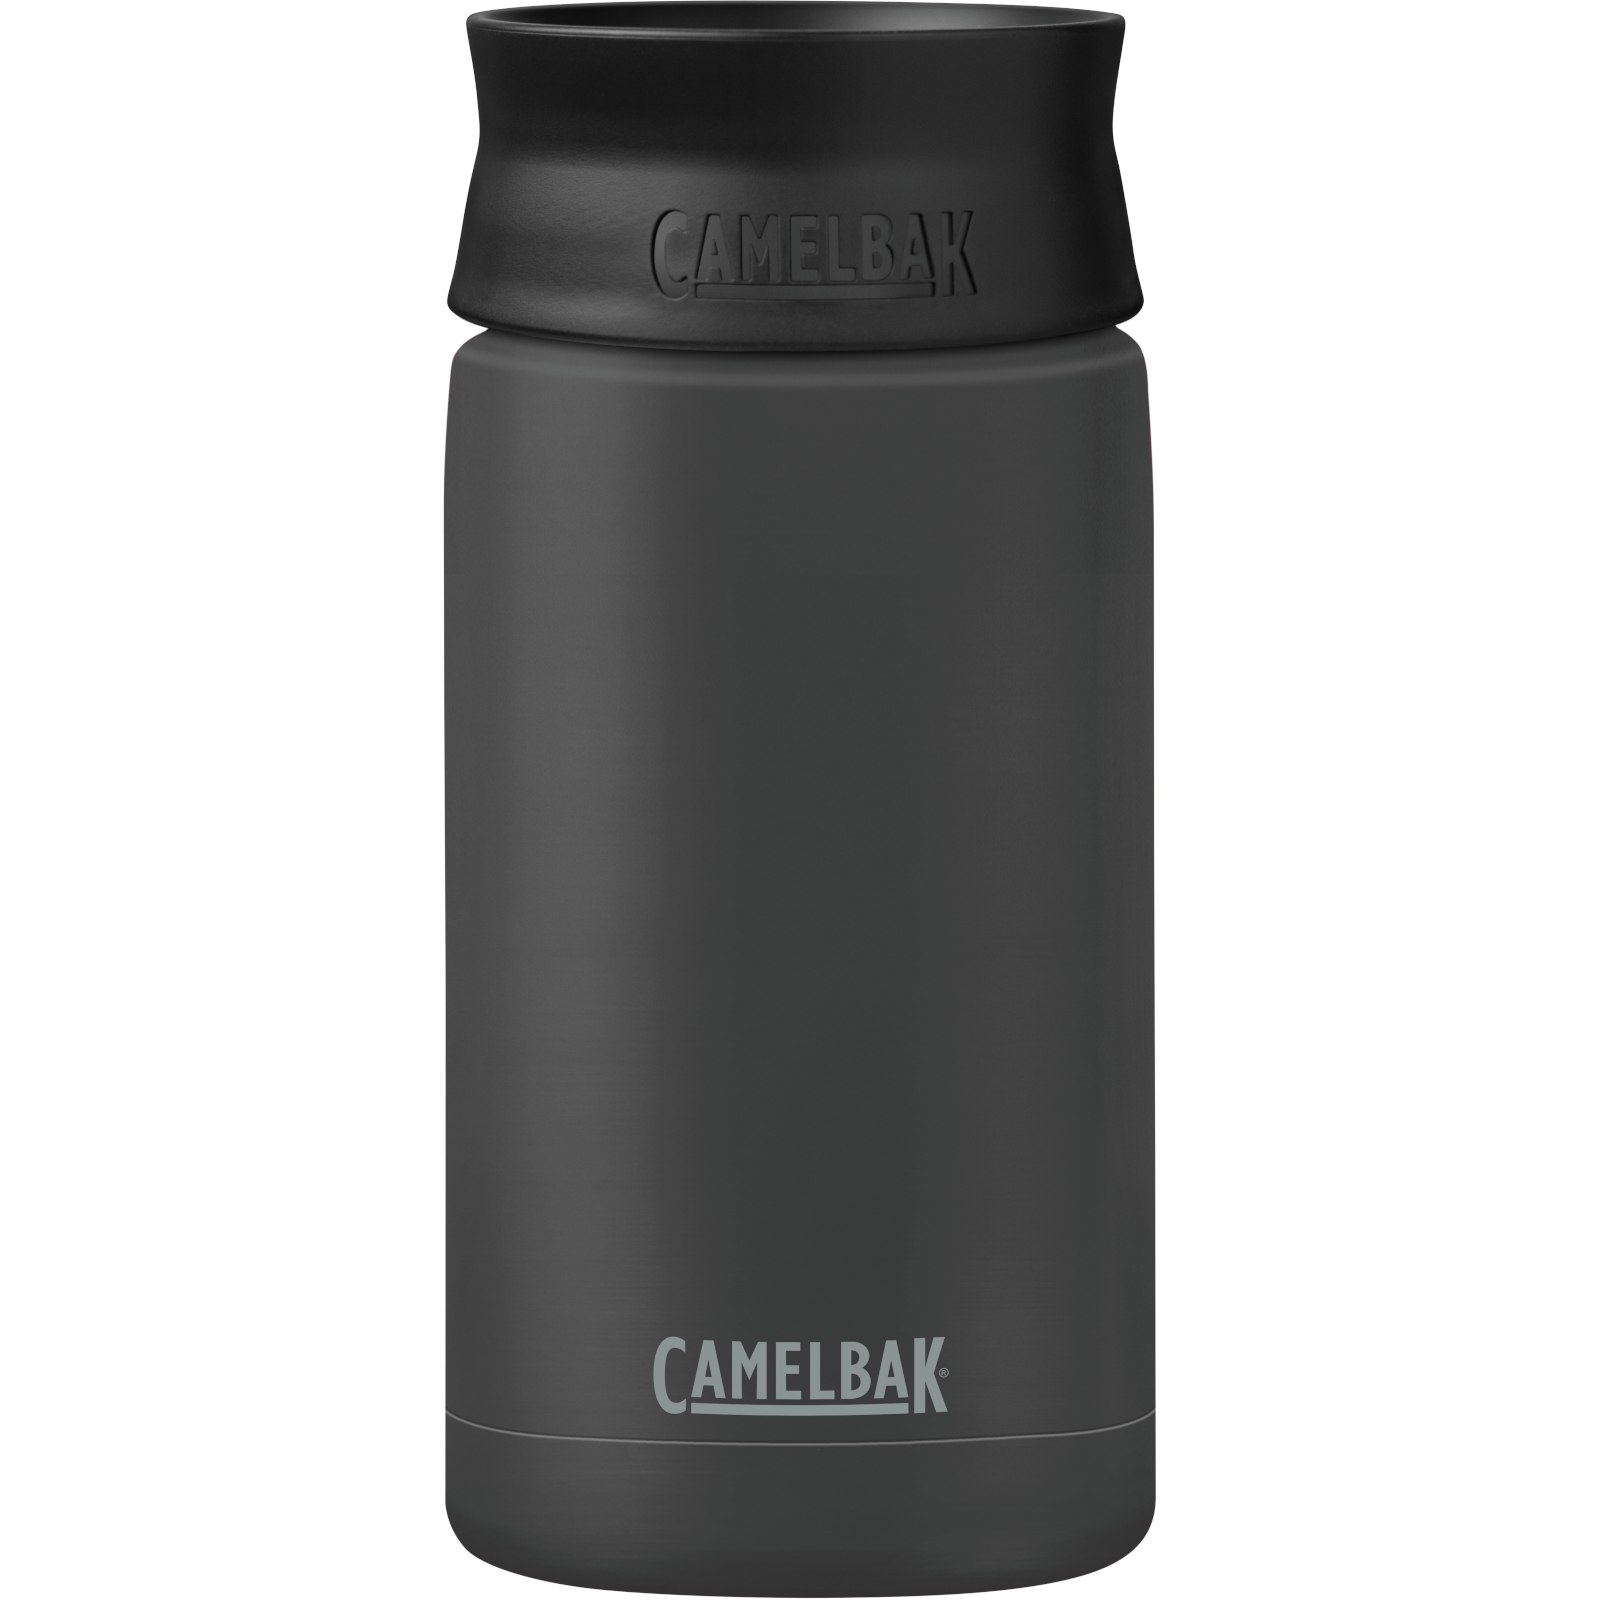 Image of CamelBak Hot Cap Vacuum Insulated Stainless Bottle 350ml - Black